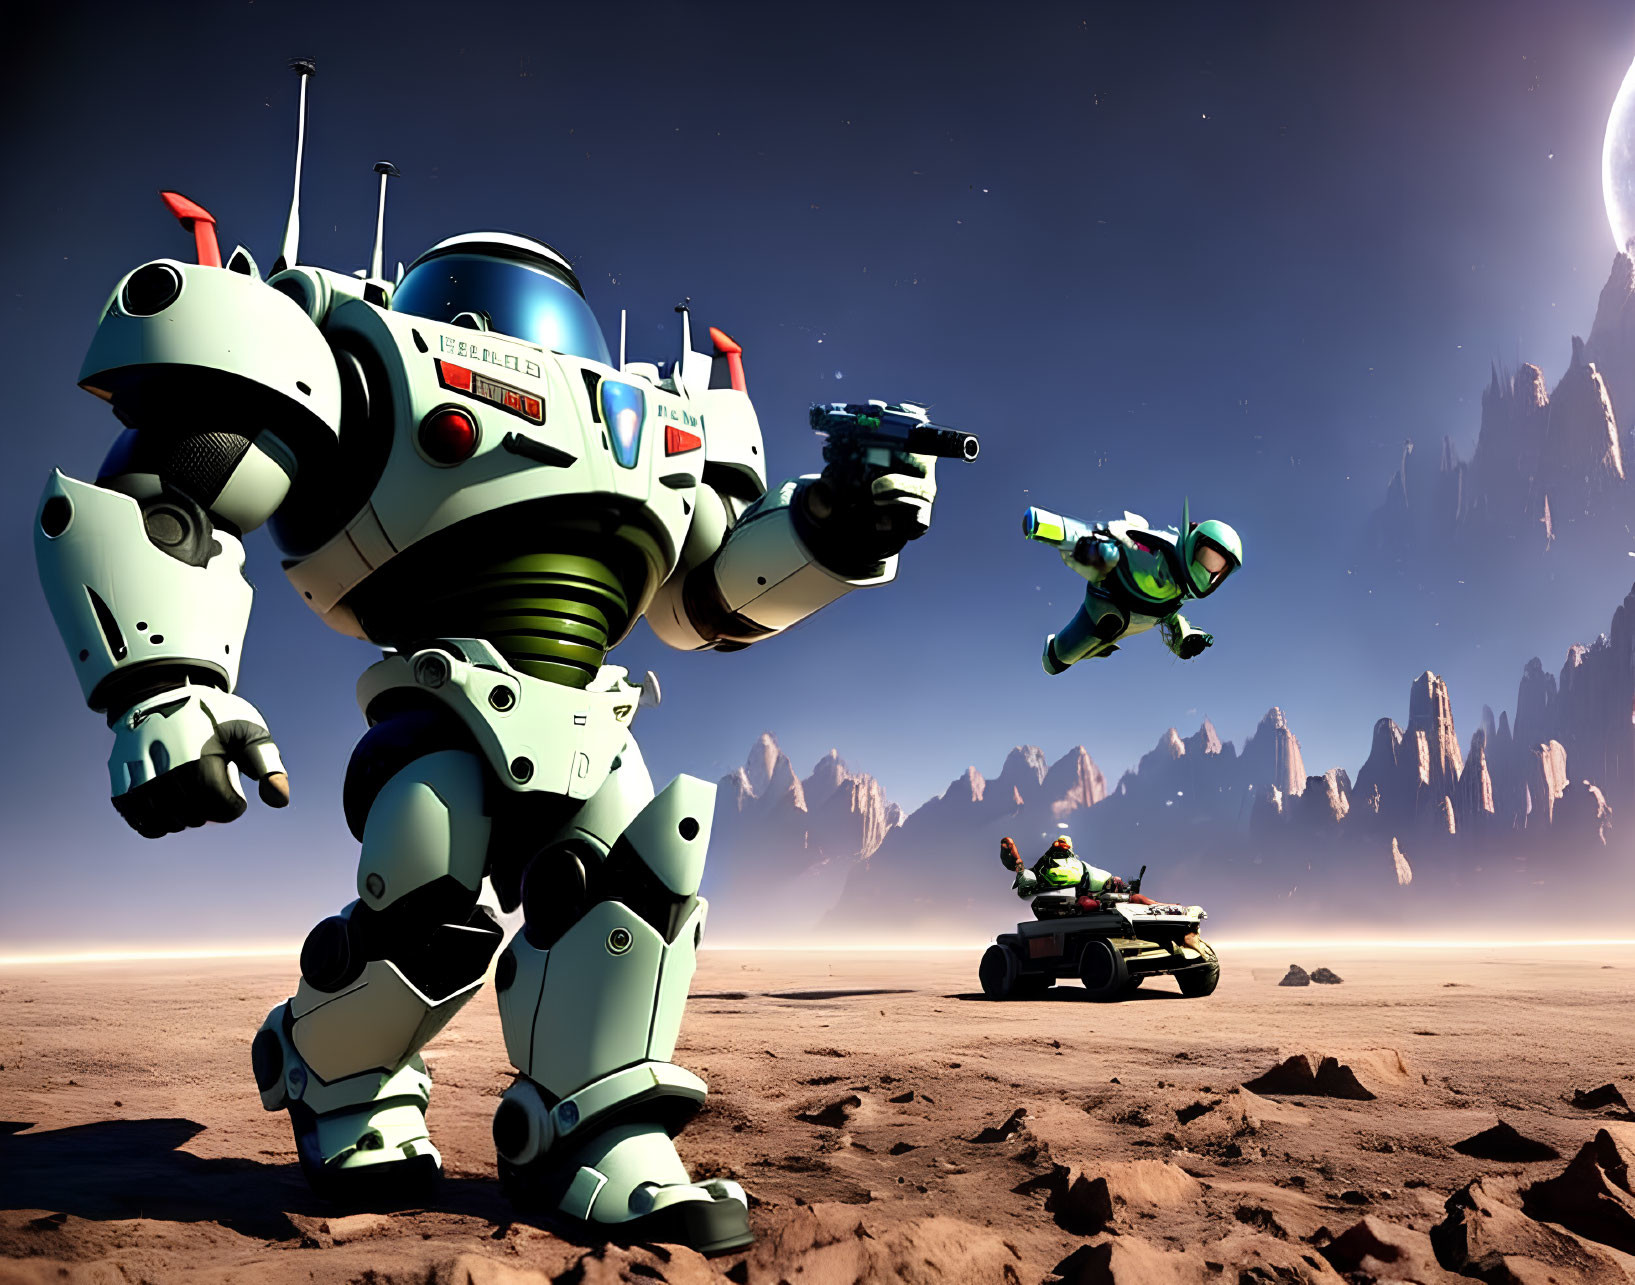 Giant robot in desert landscape with flying figure and alien terrain.